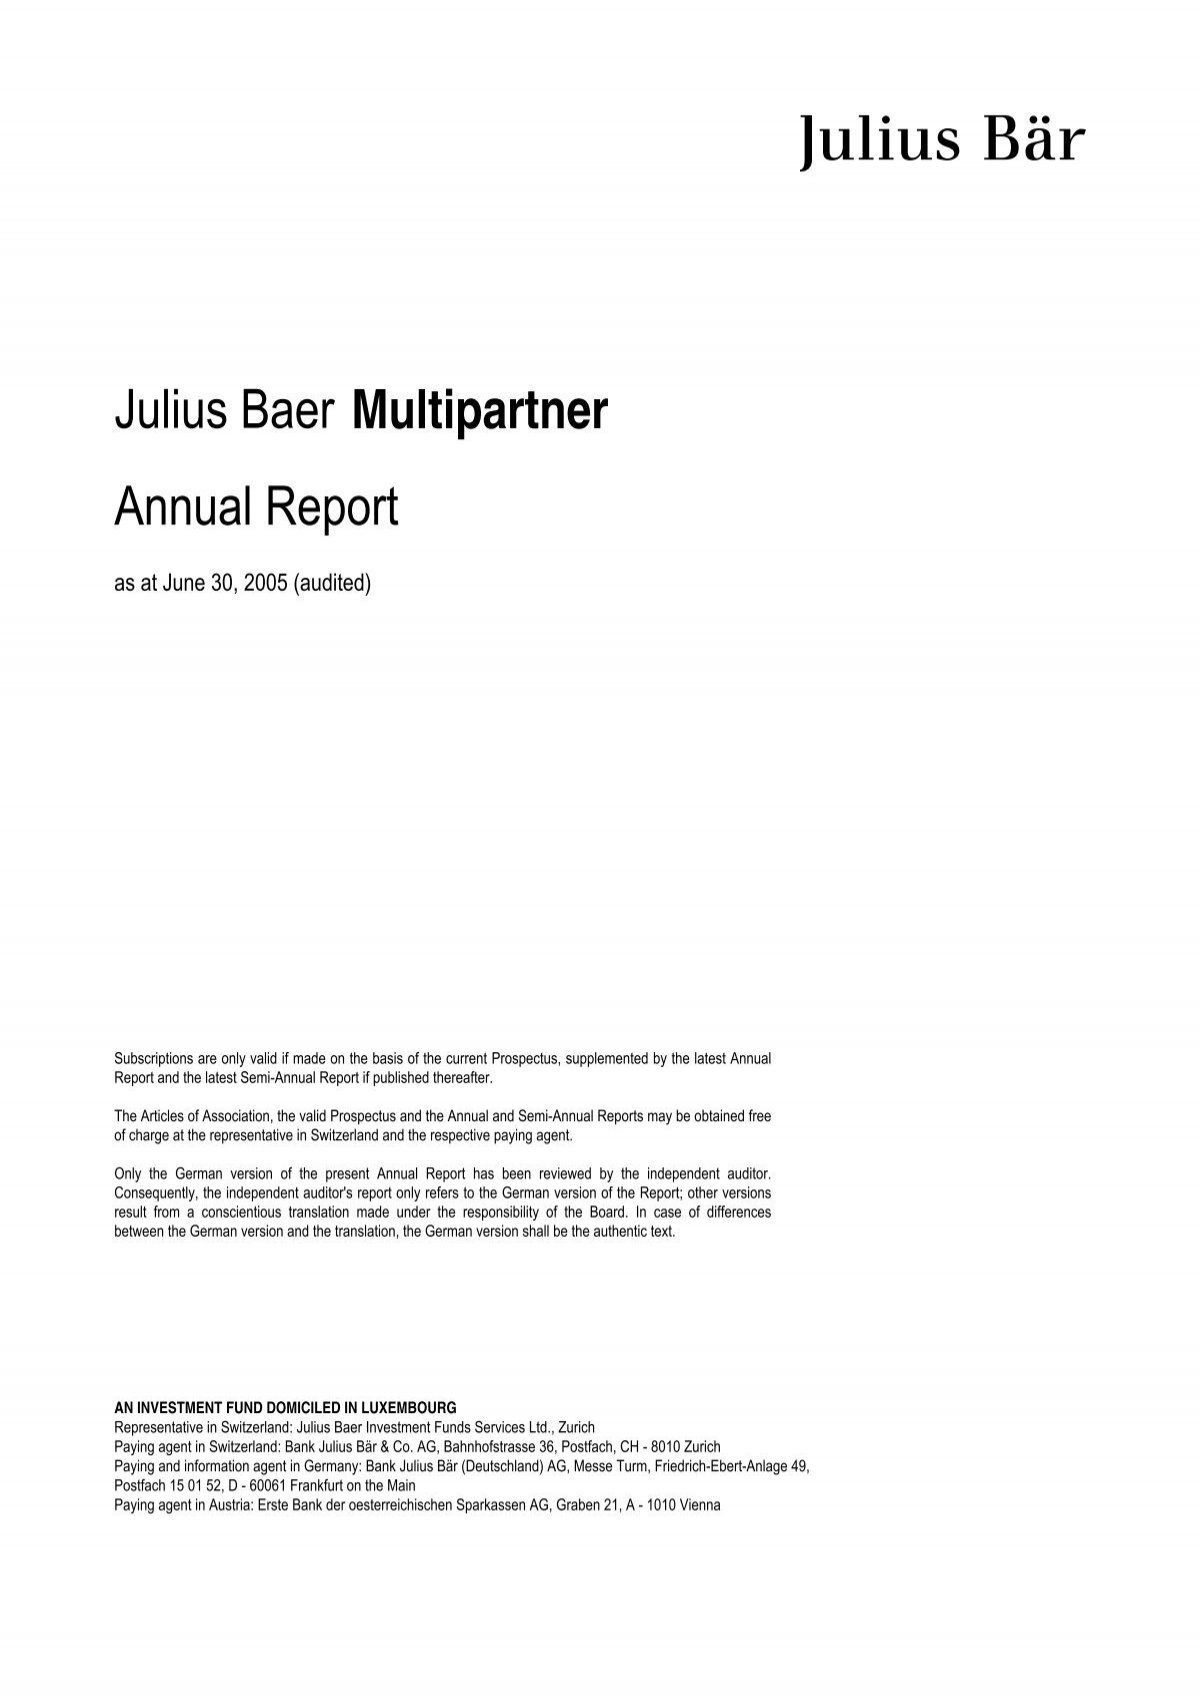 Julius Baer Multipartner Annual Report